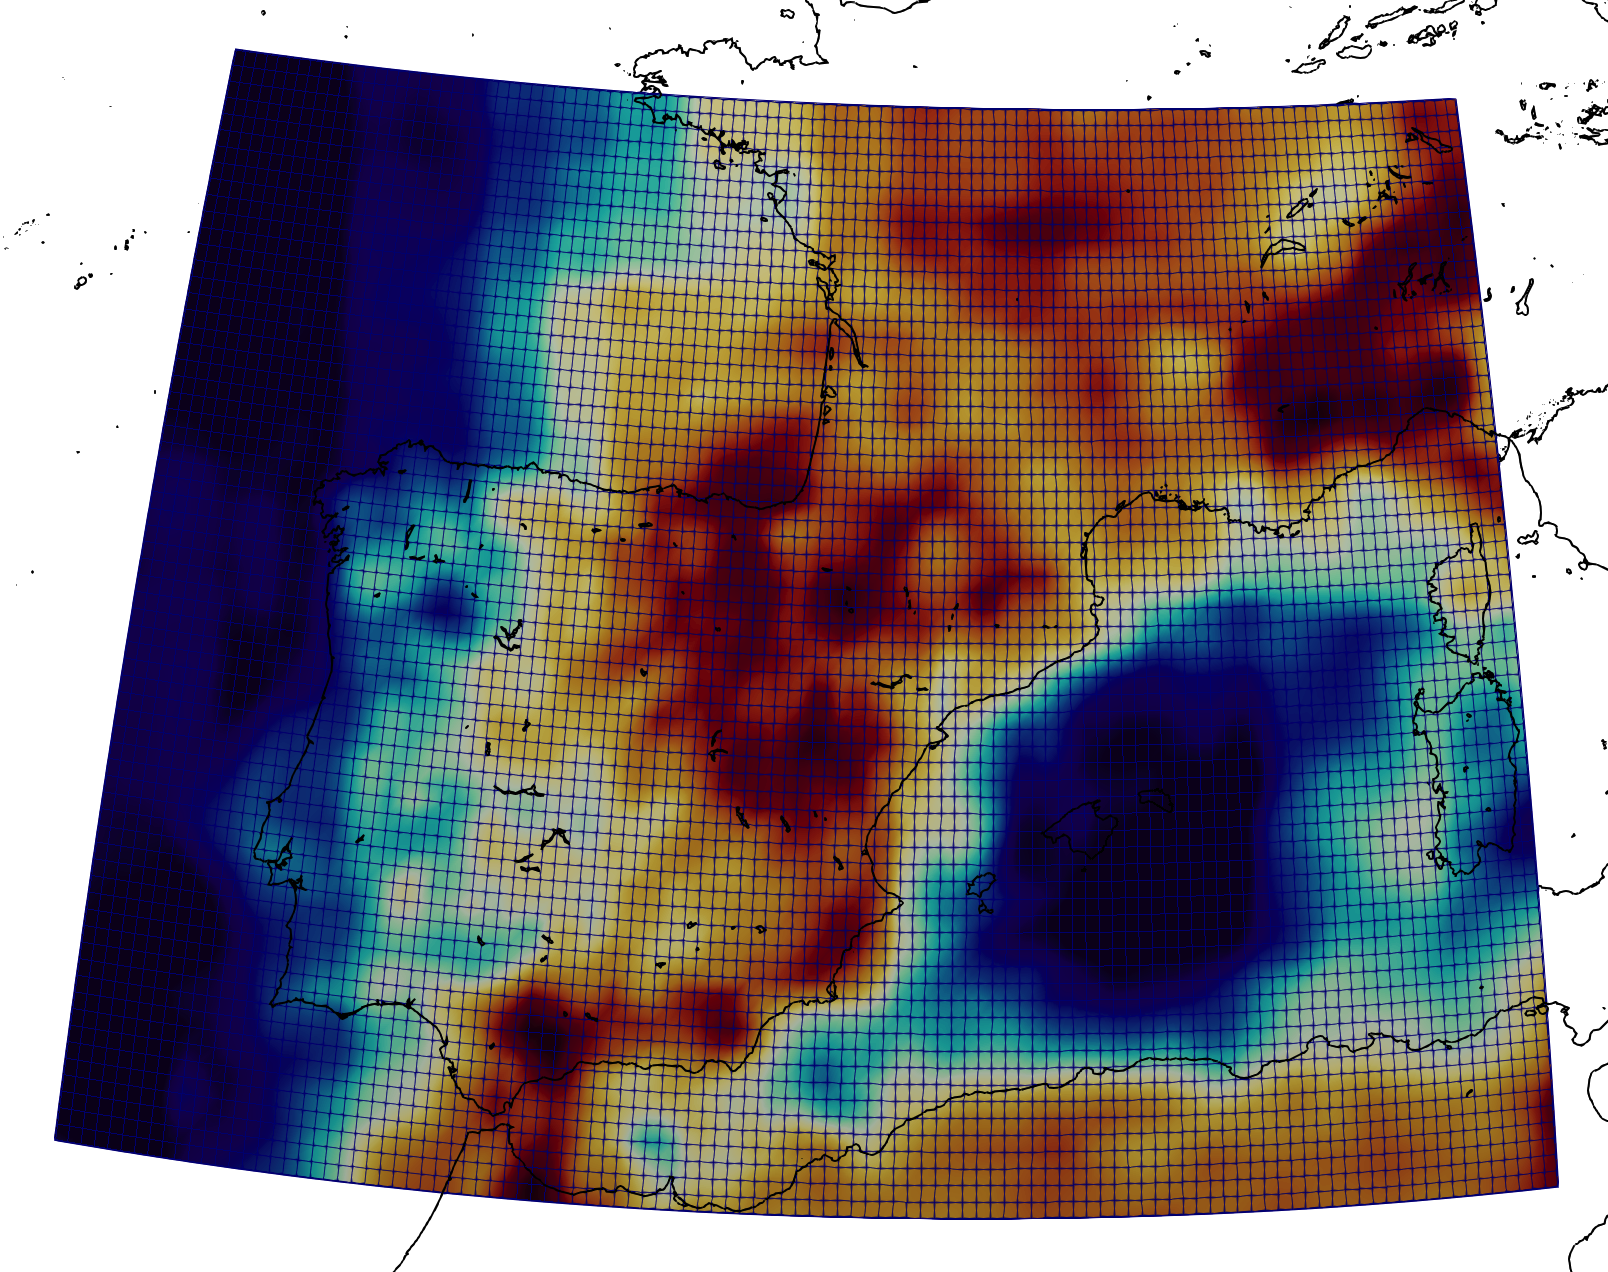 SV velocity in CSEM at 20 km depth beneath the Iberian Peninsula and the Western Mediterranean